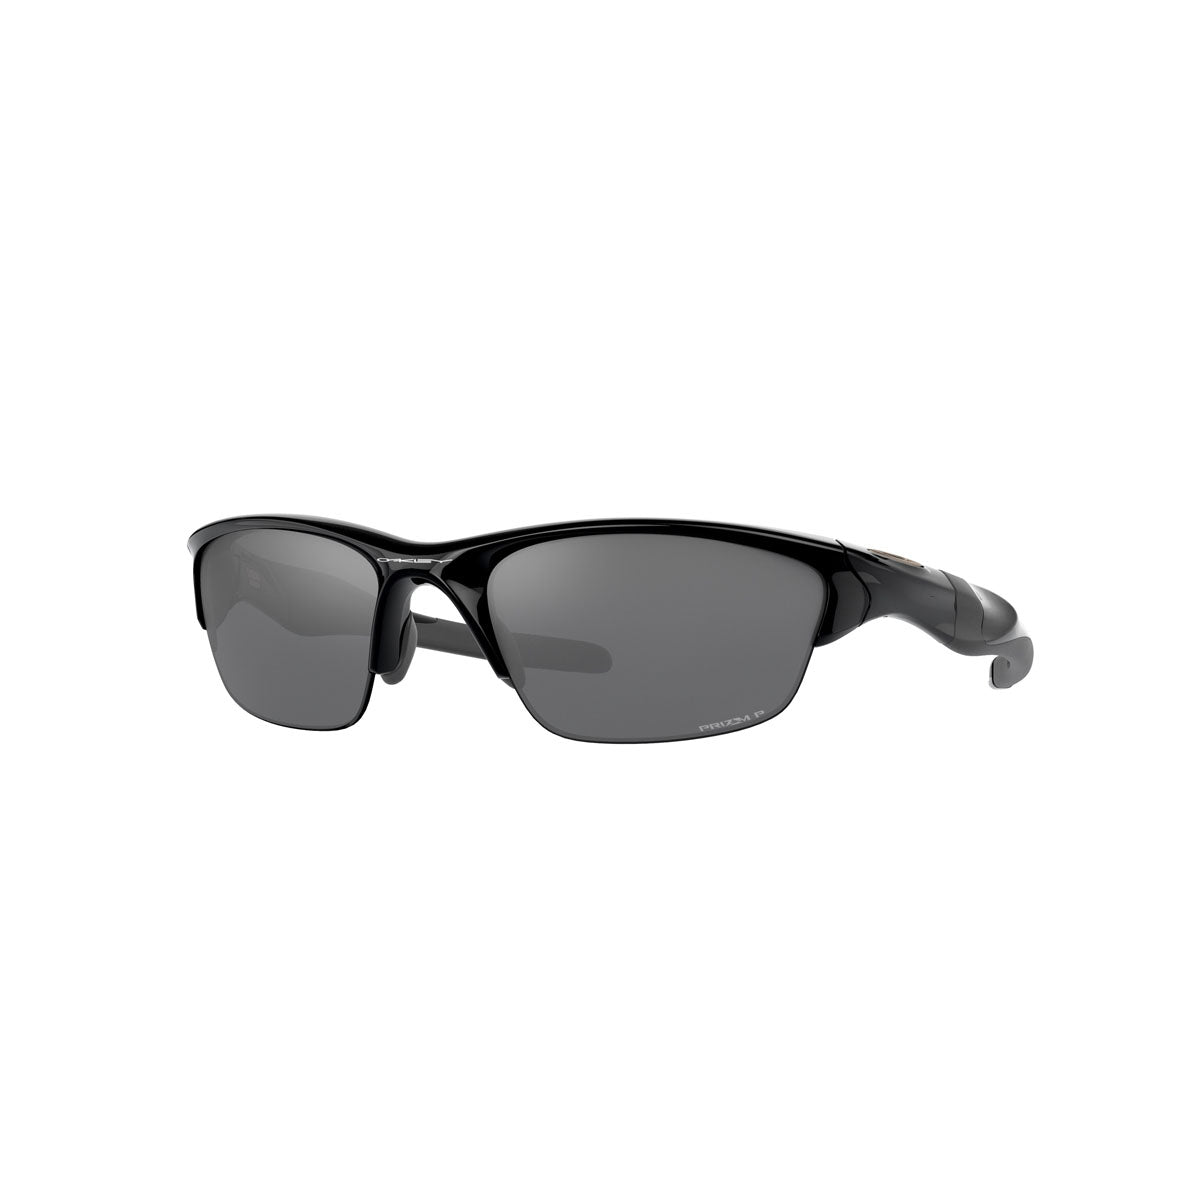 Oakley Half Jacket 2.0 Polarized Sunglasses